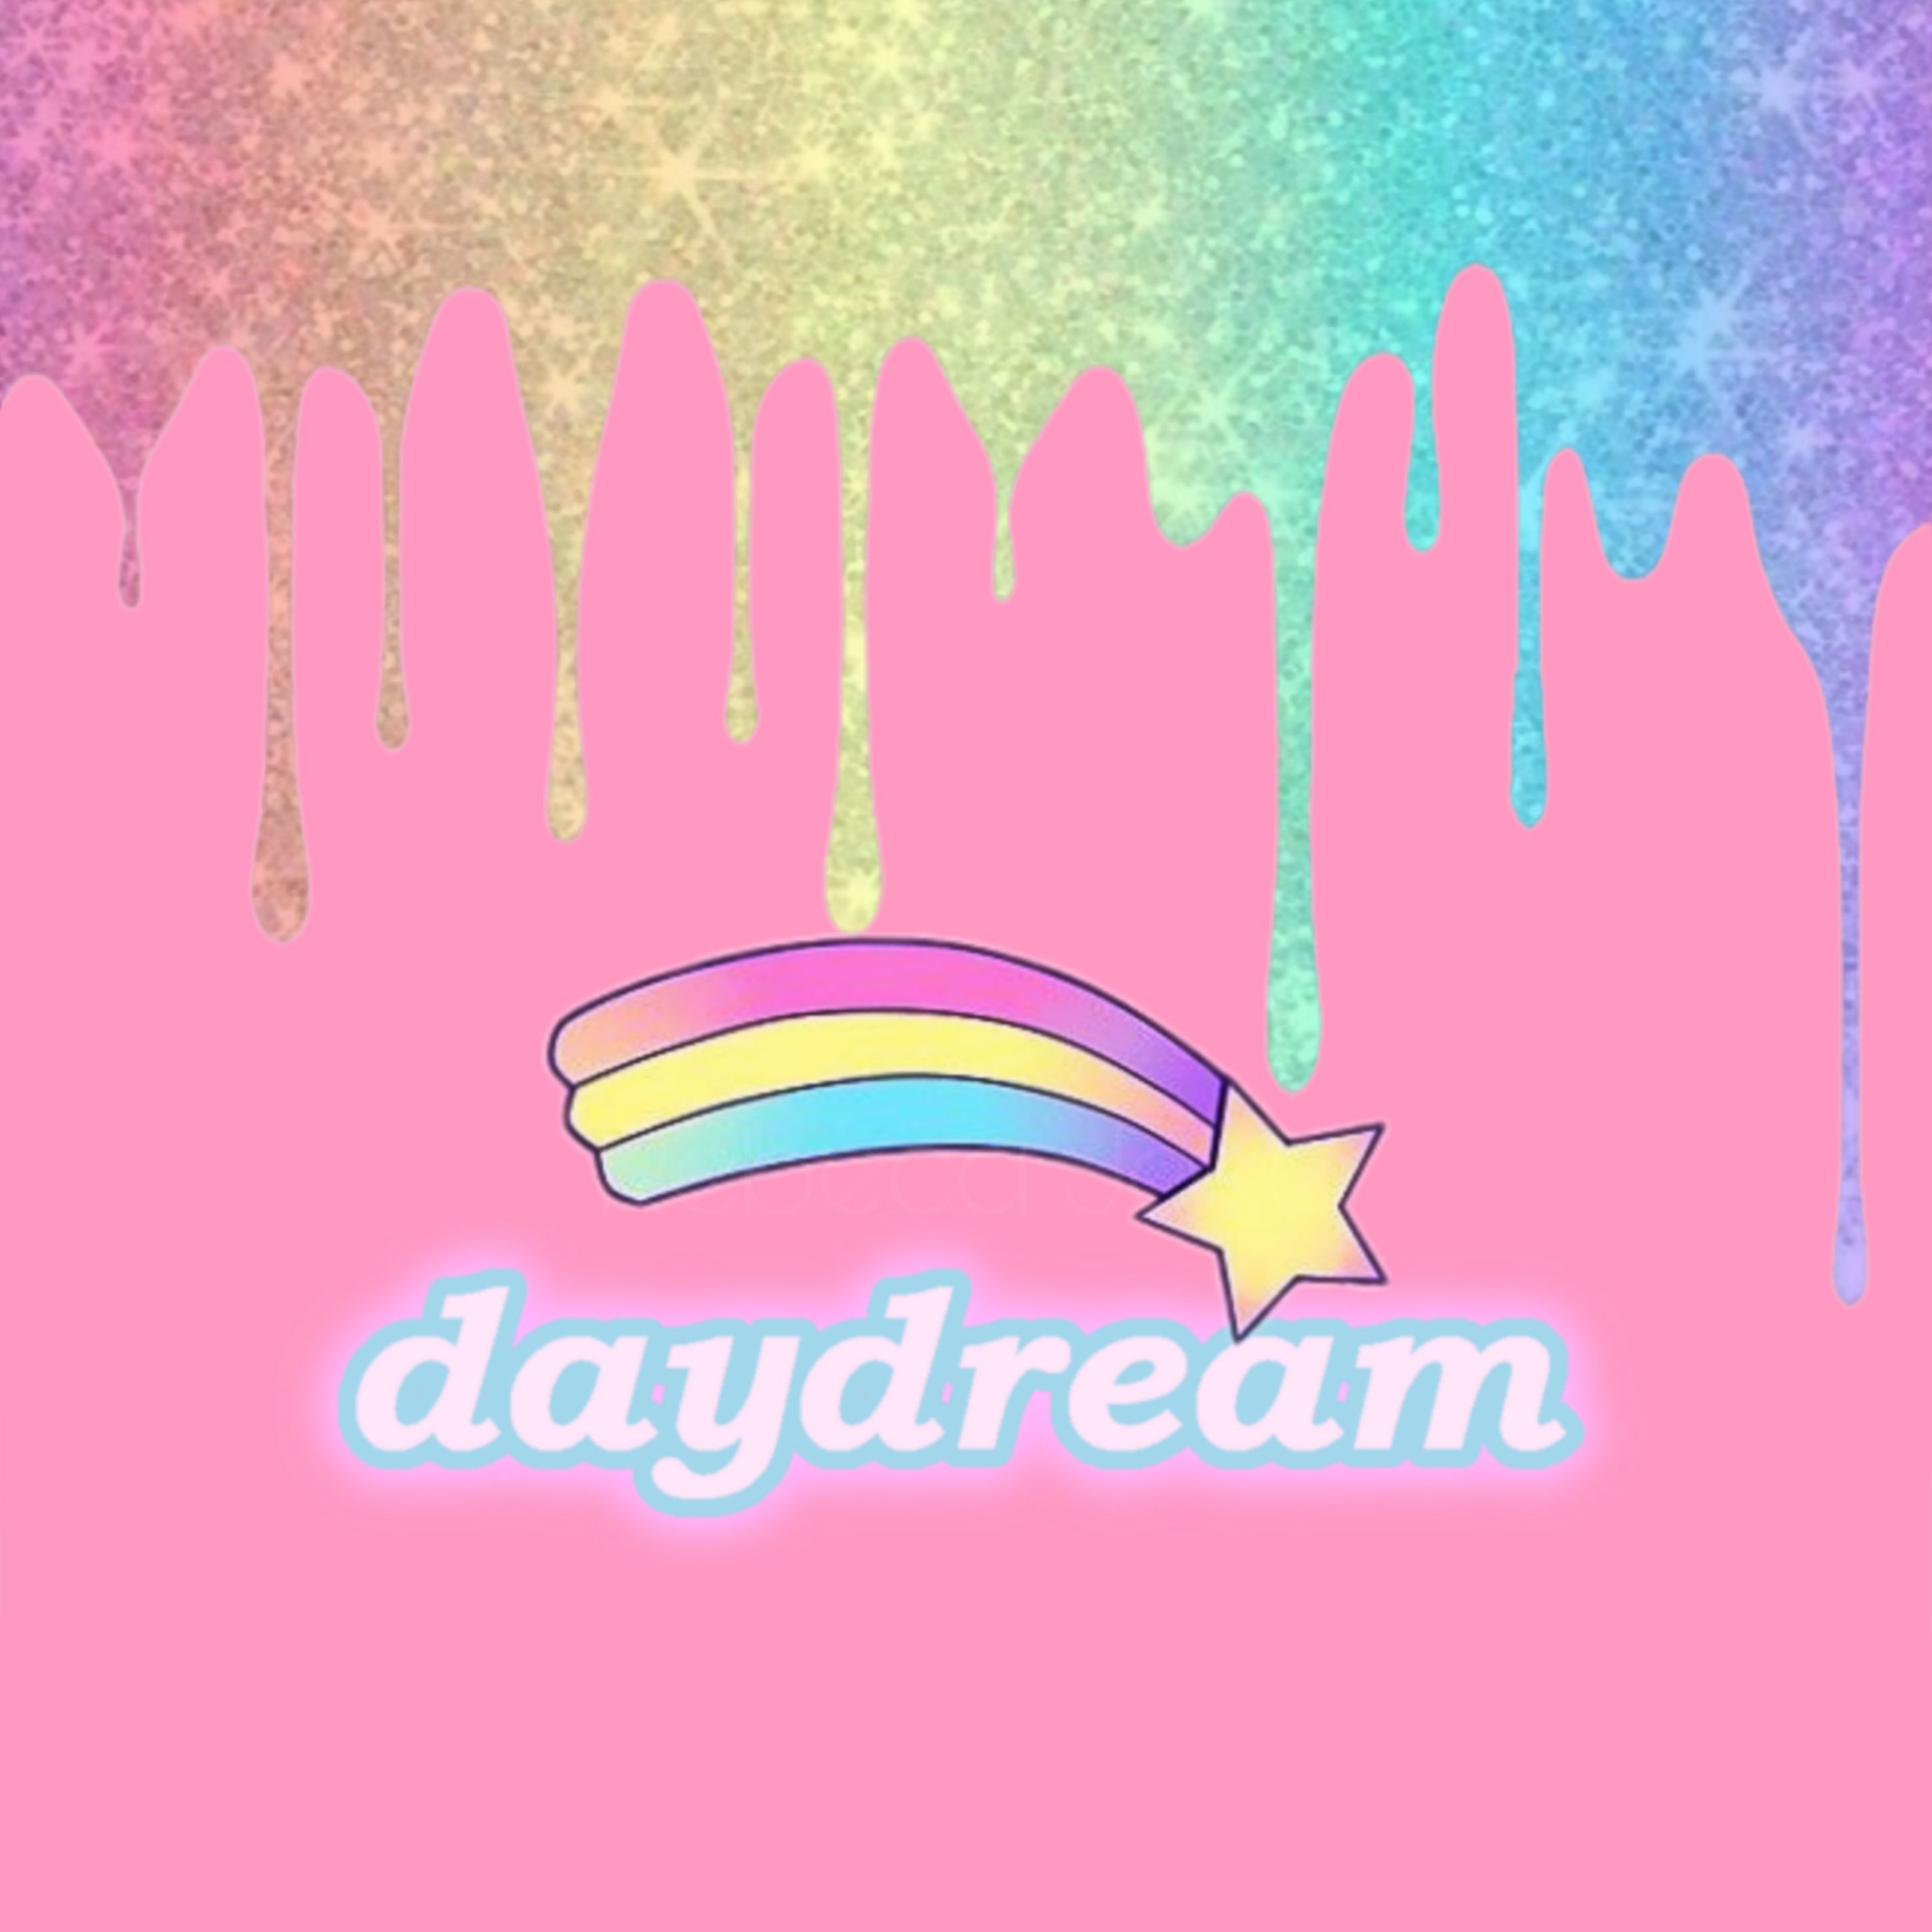 Rainbow Drip Daydream Wallpaper. Rebeca Joke. Daydream wallpaper, Instagram wallpaper, Neon signs